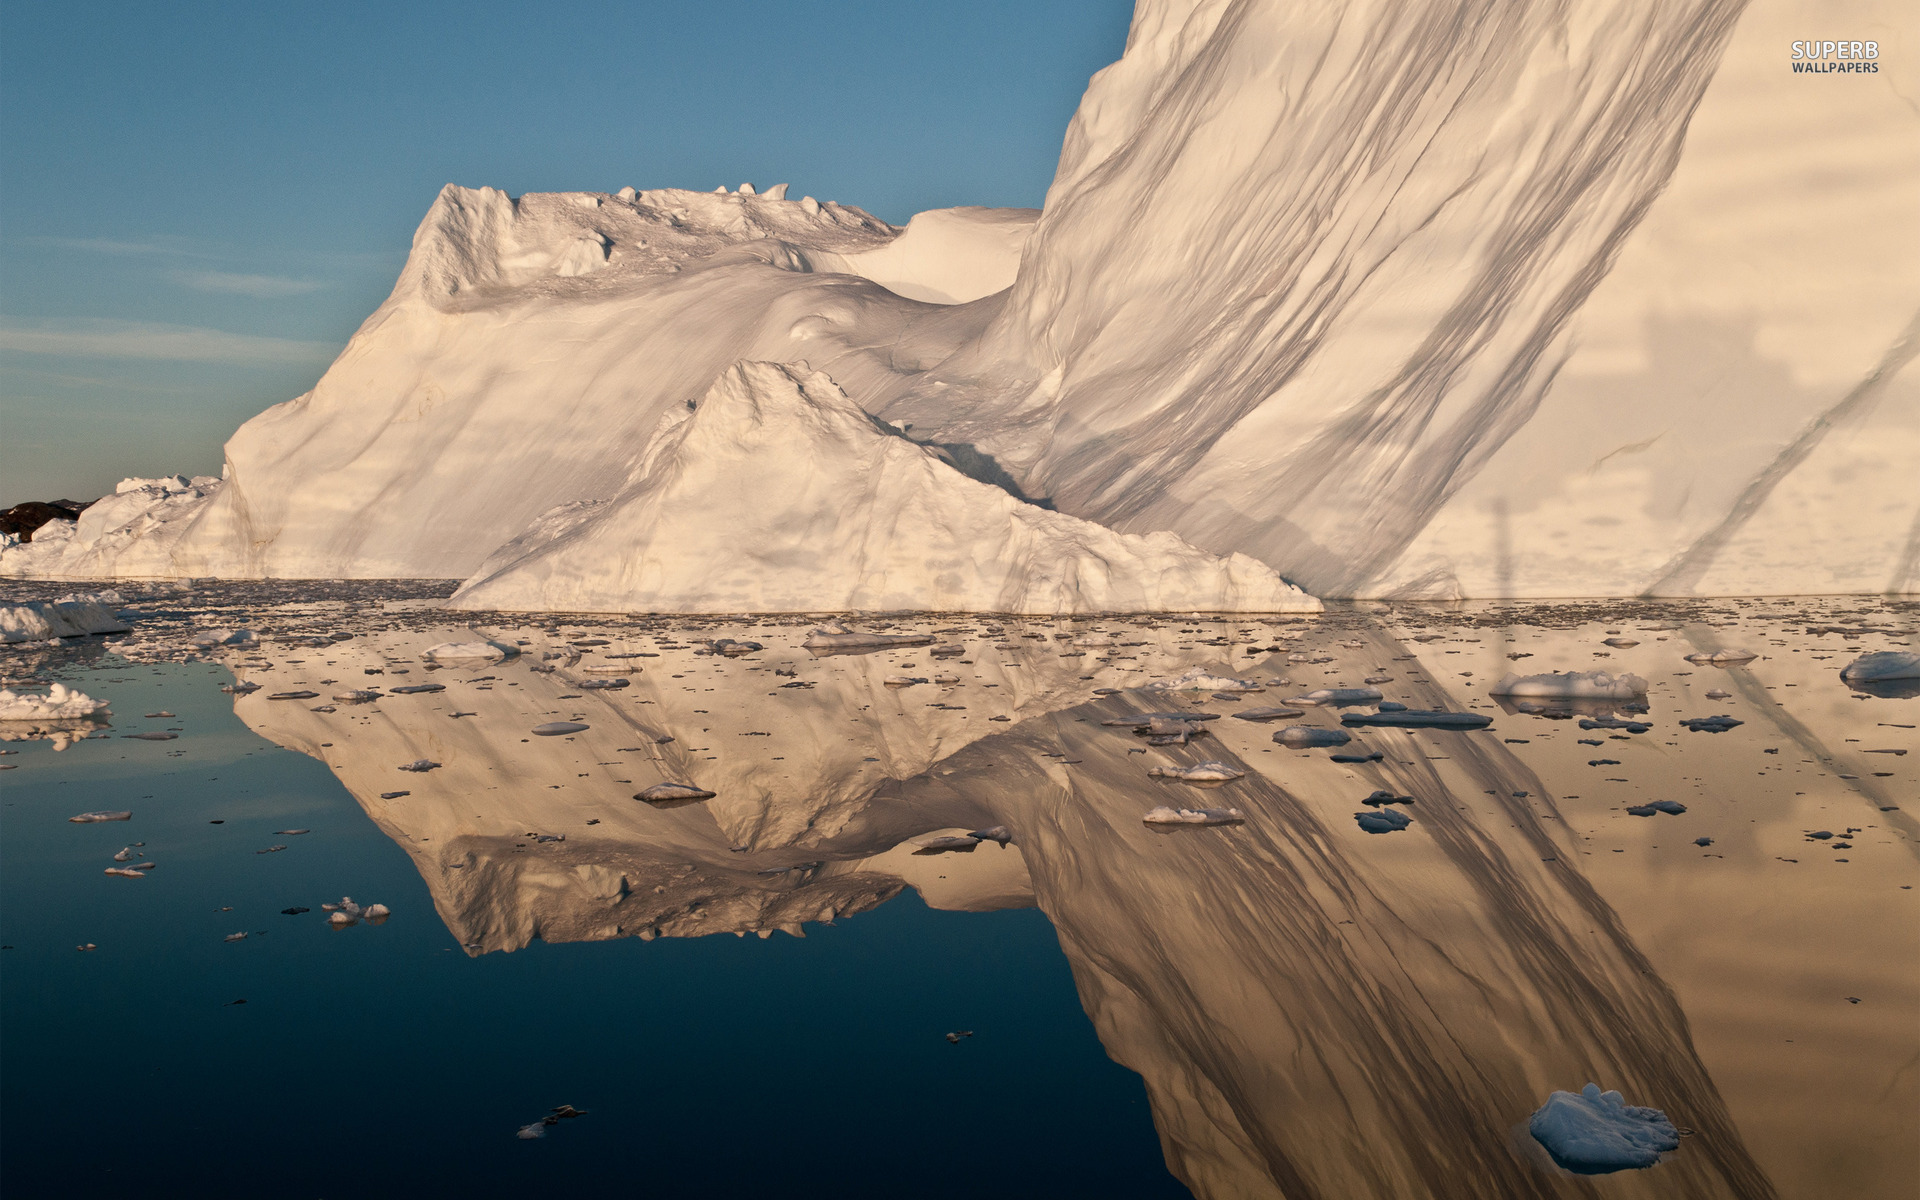 Image Iceberg Reflection Greenland Wallpaper And Stock Photos